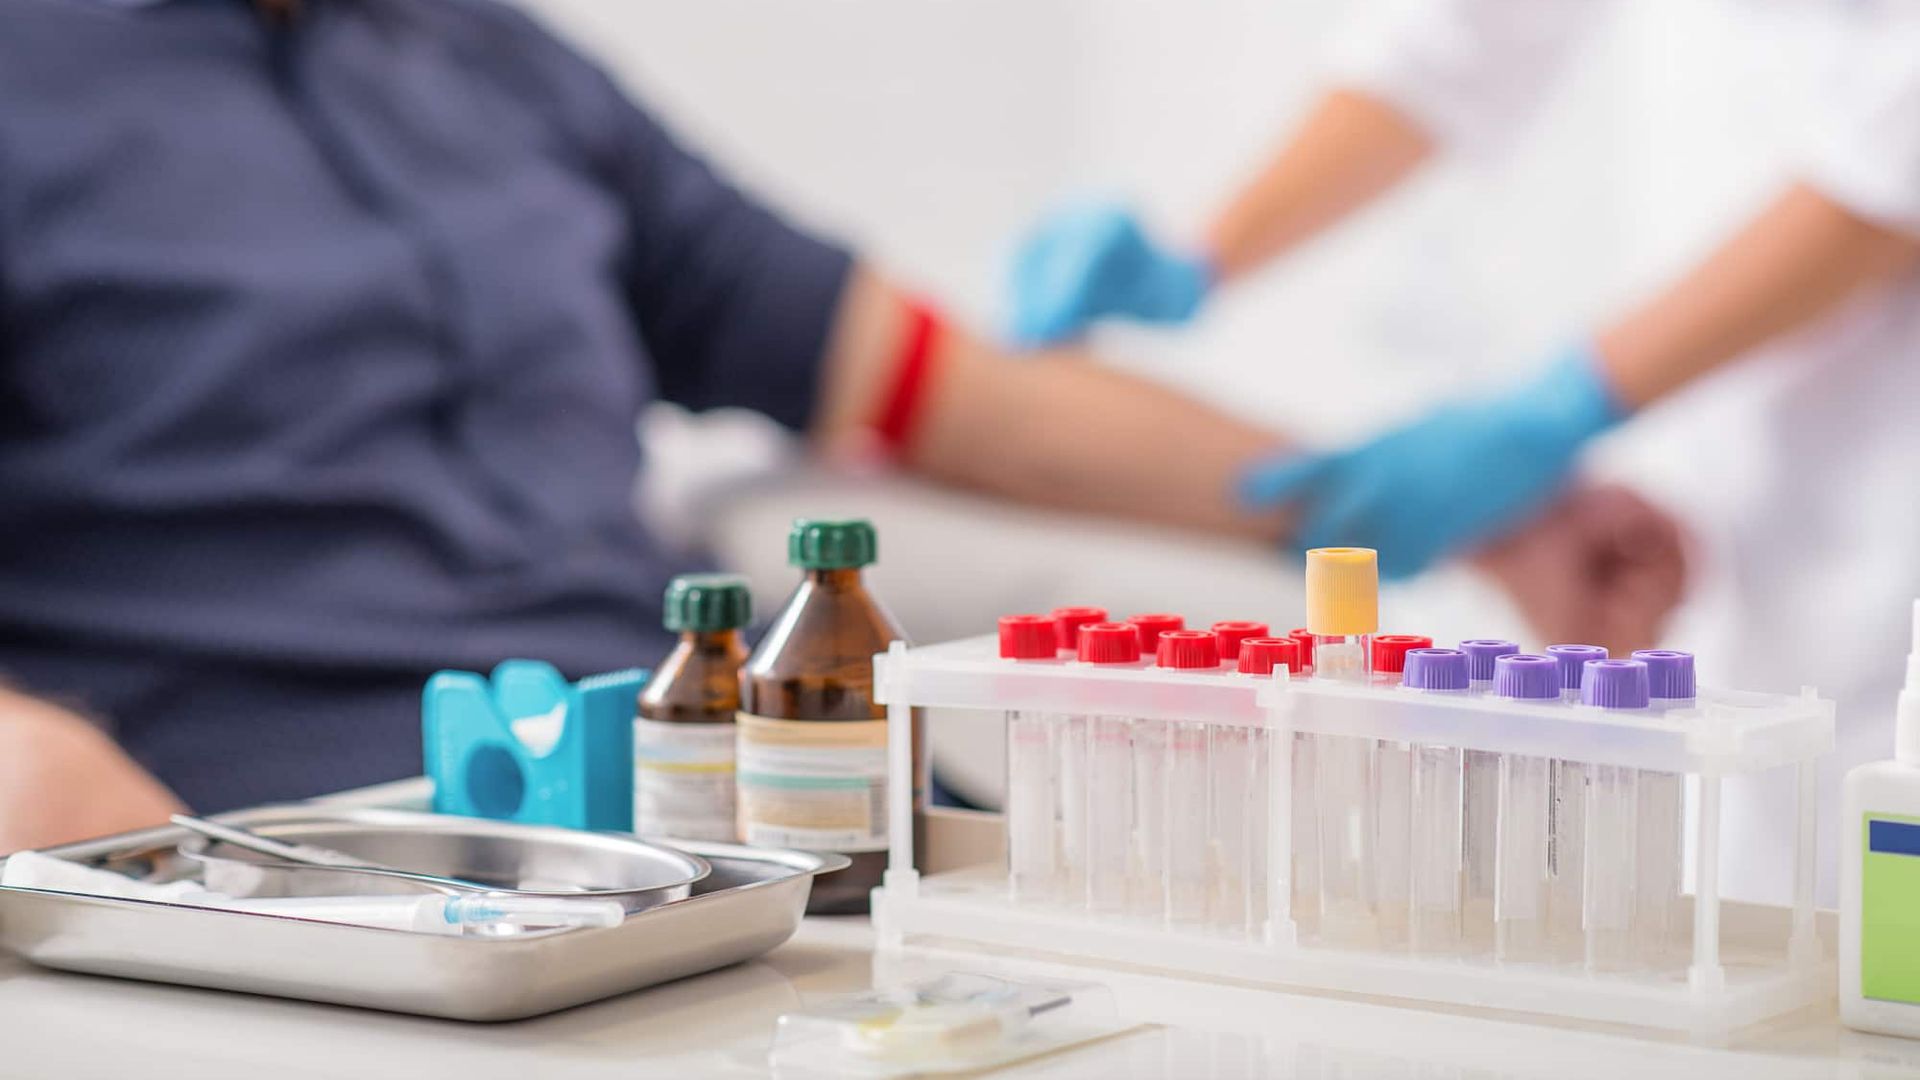 New Stockholm3 Blood Test Detects Prostate Cancer